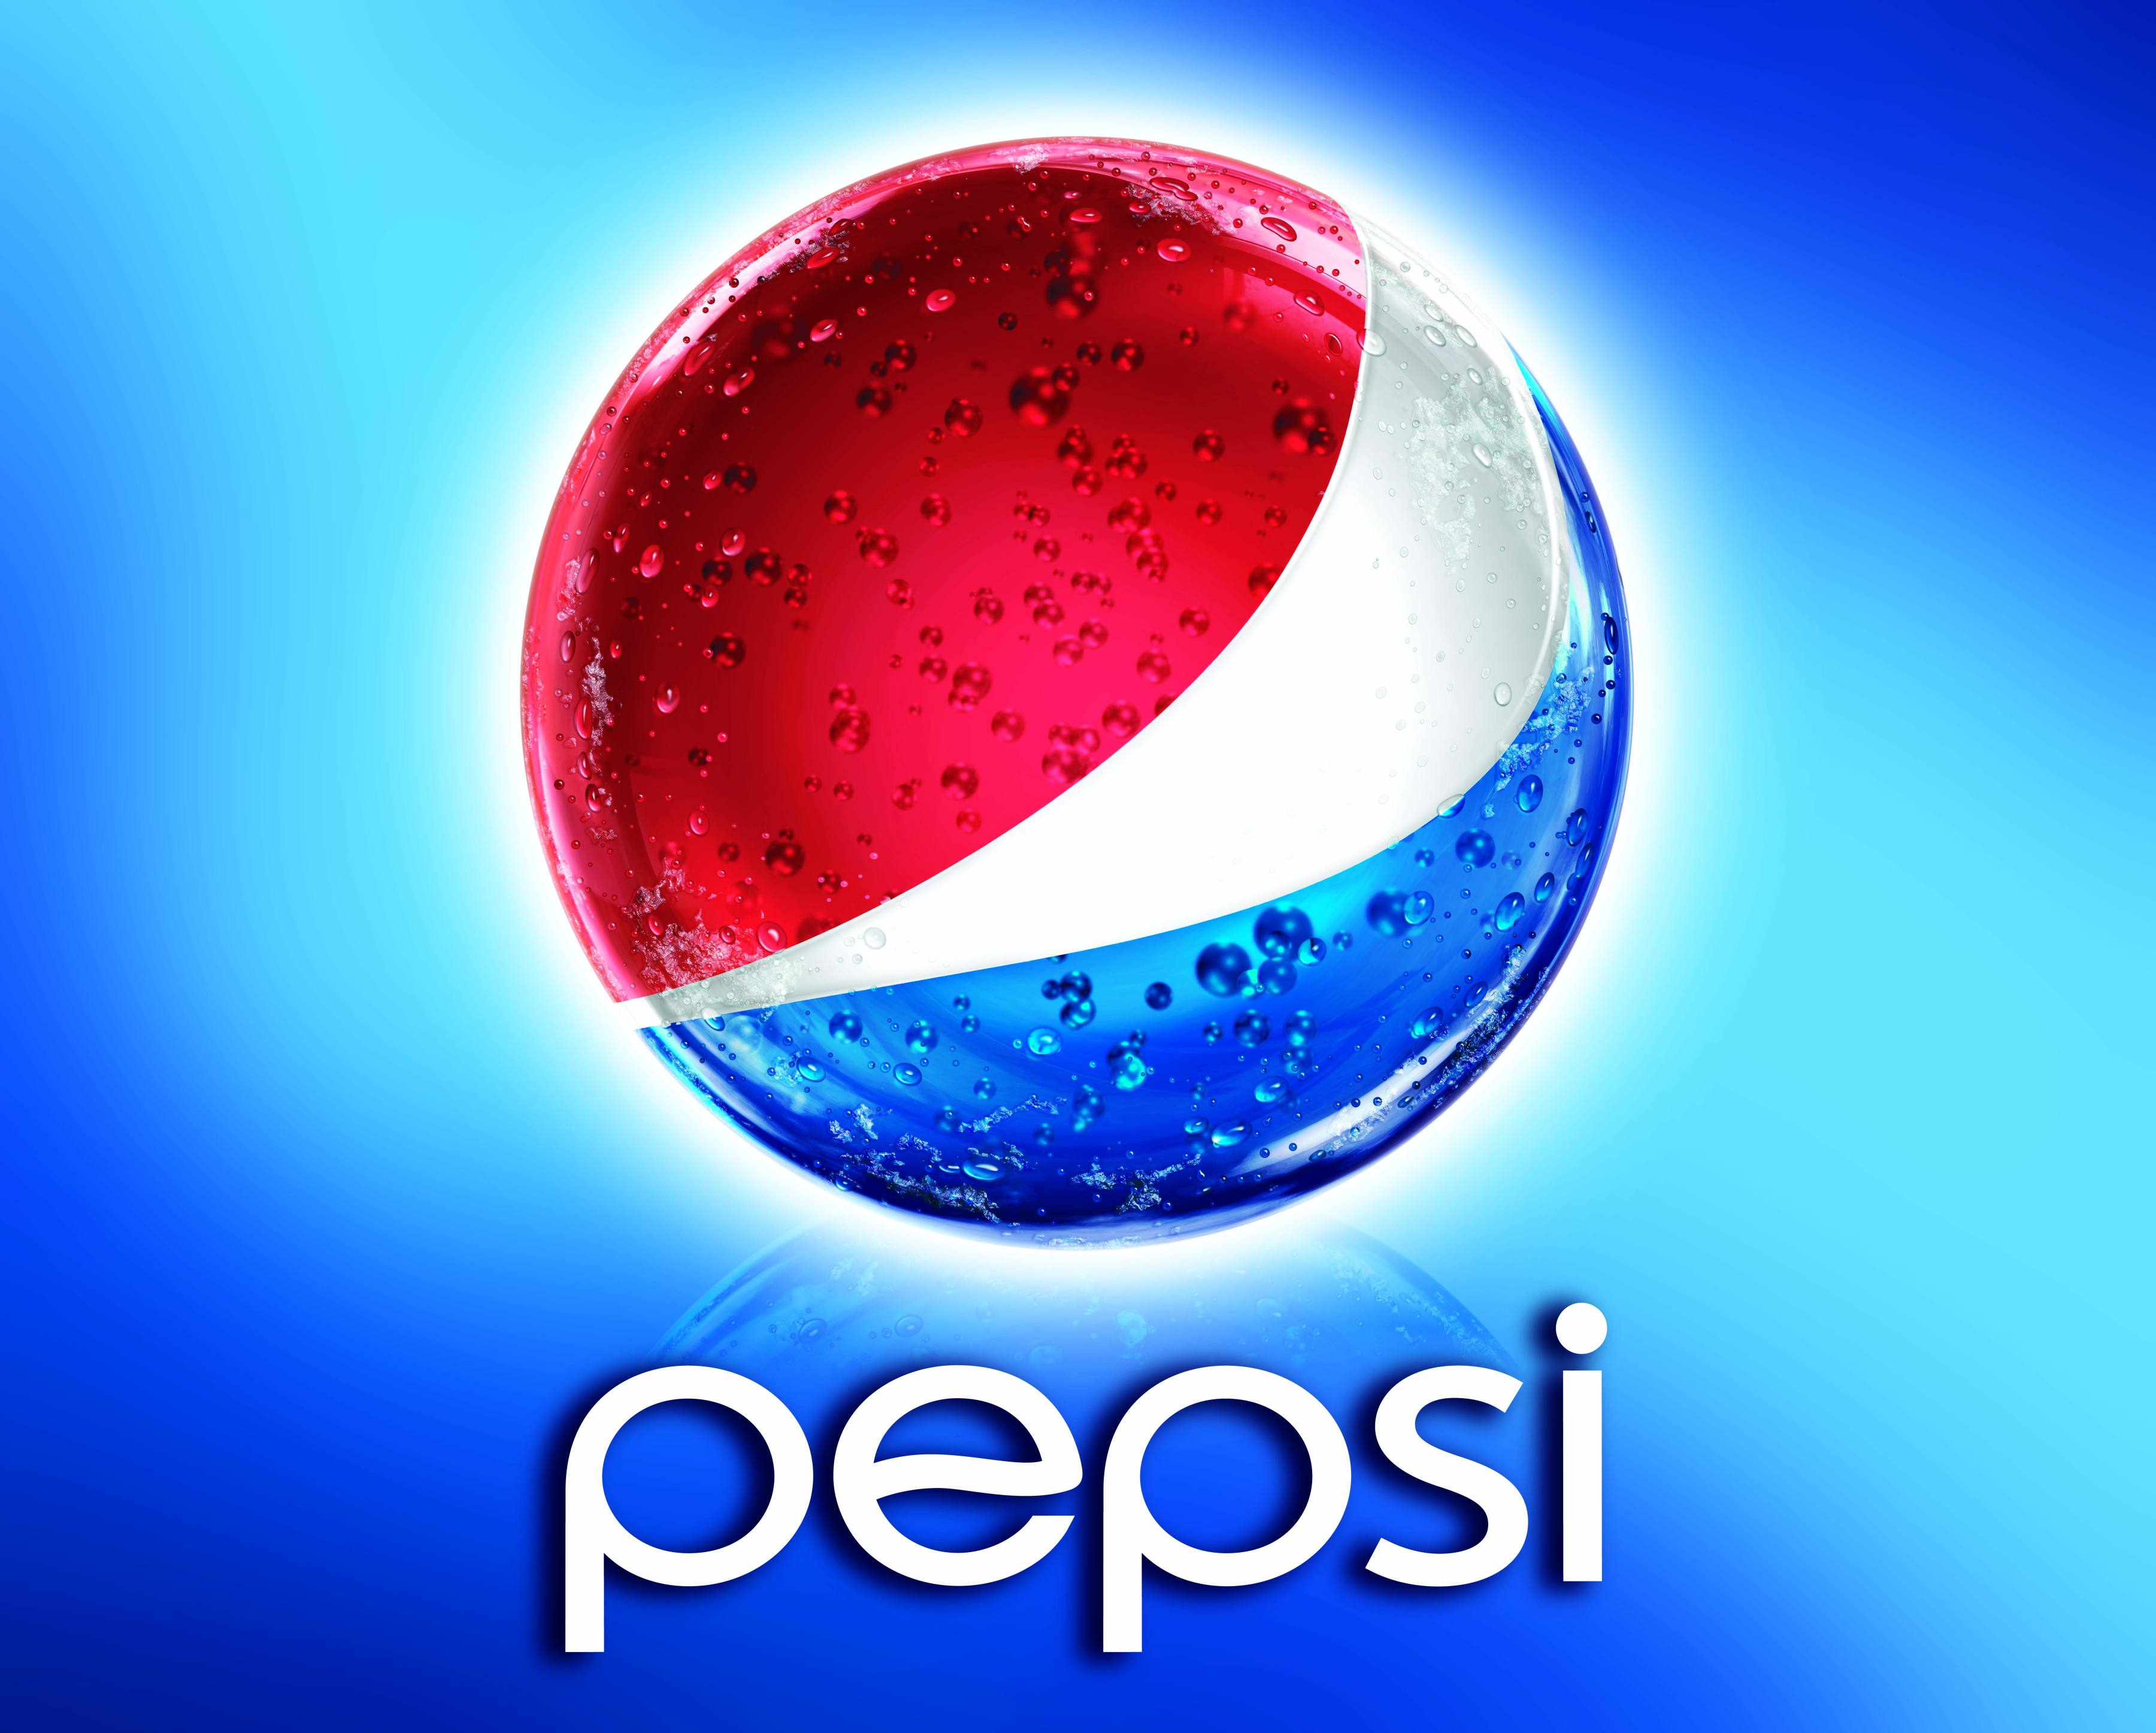 Pepci Logo - Pepsi Logo 2013 HD Wallpaper, Background Image